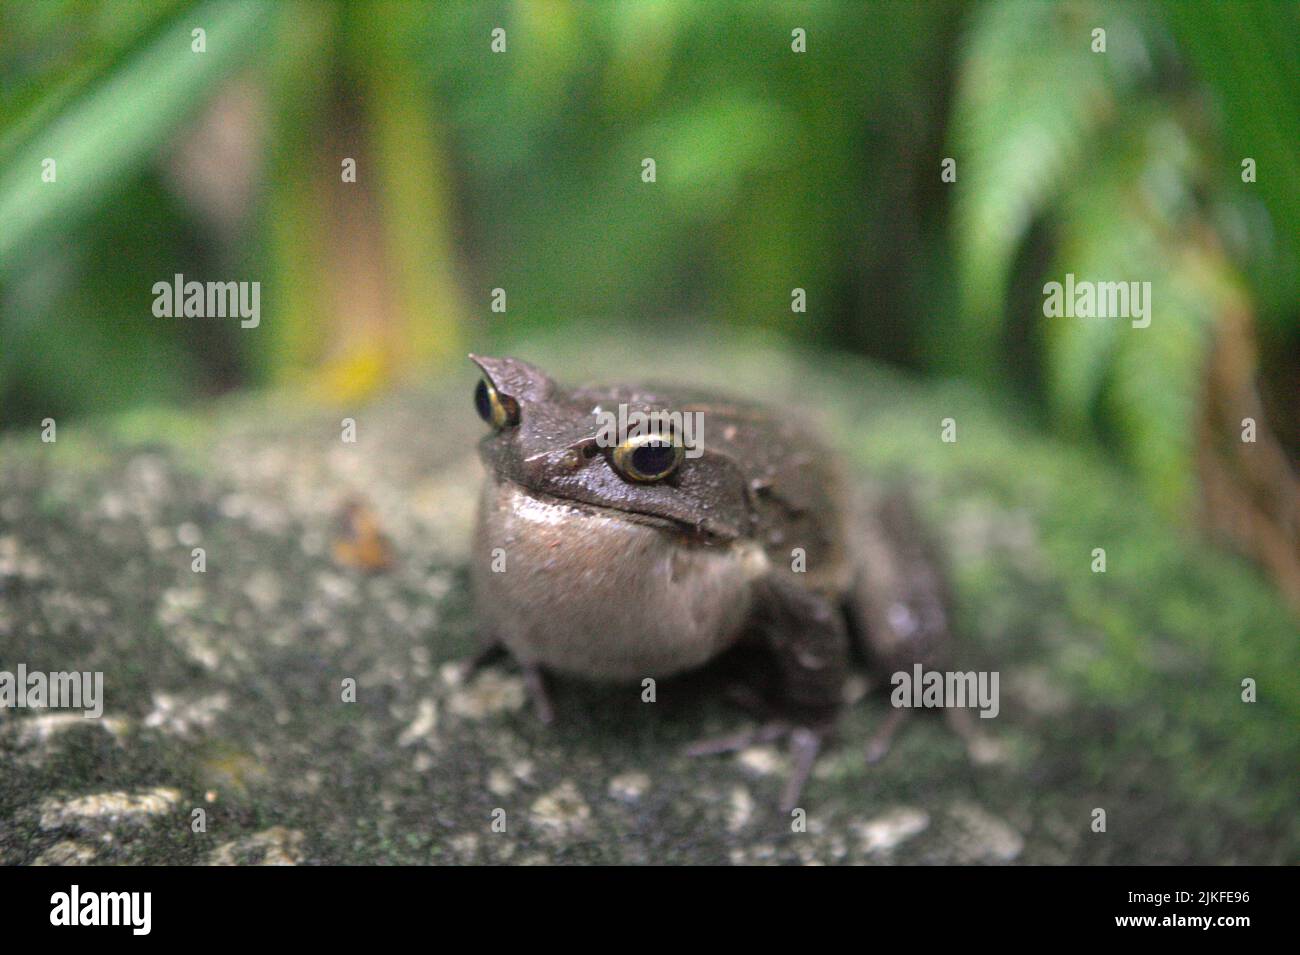 Malaysischer gehörnter Frosch, auch bekannt als langnasiger gehörnter Frosch oder malaiischer Laubfrosch (Megophyris nasuta) am Mount Kinabalu Botanical Garden im Kinabalu Park, Ranau, Sabah, Malaysia. Stockfoto